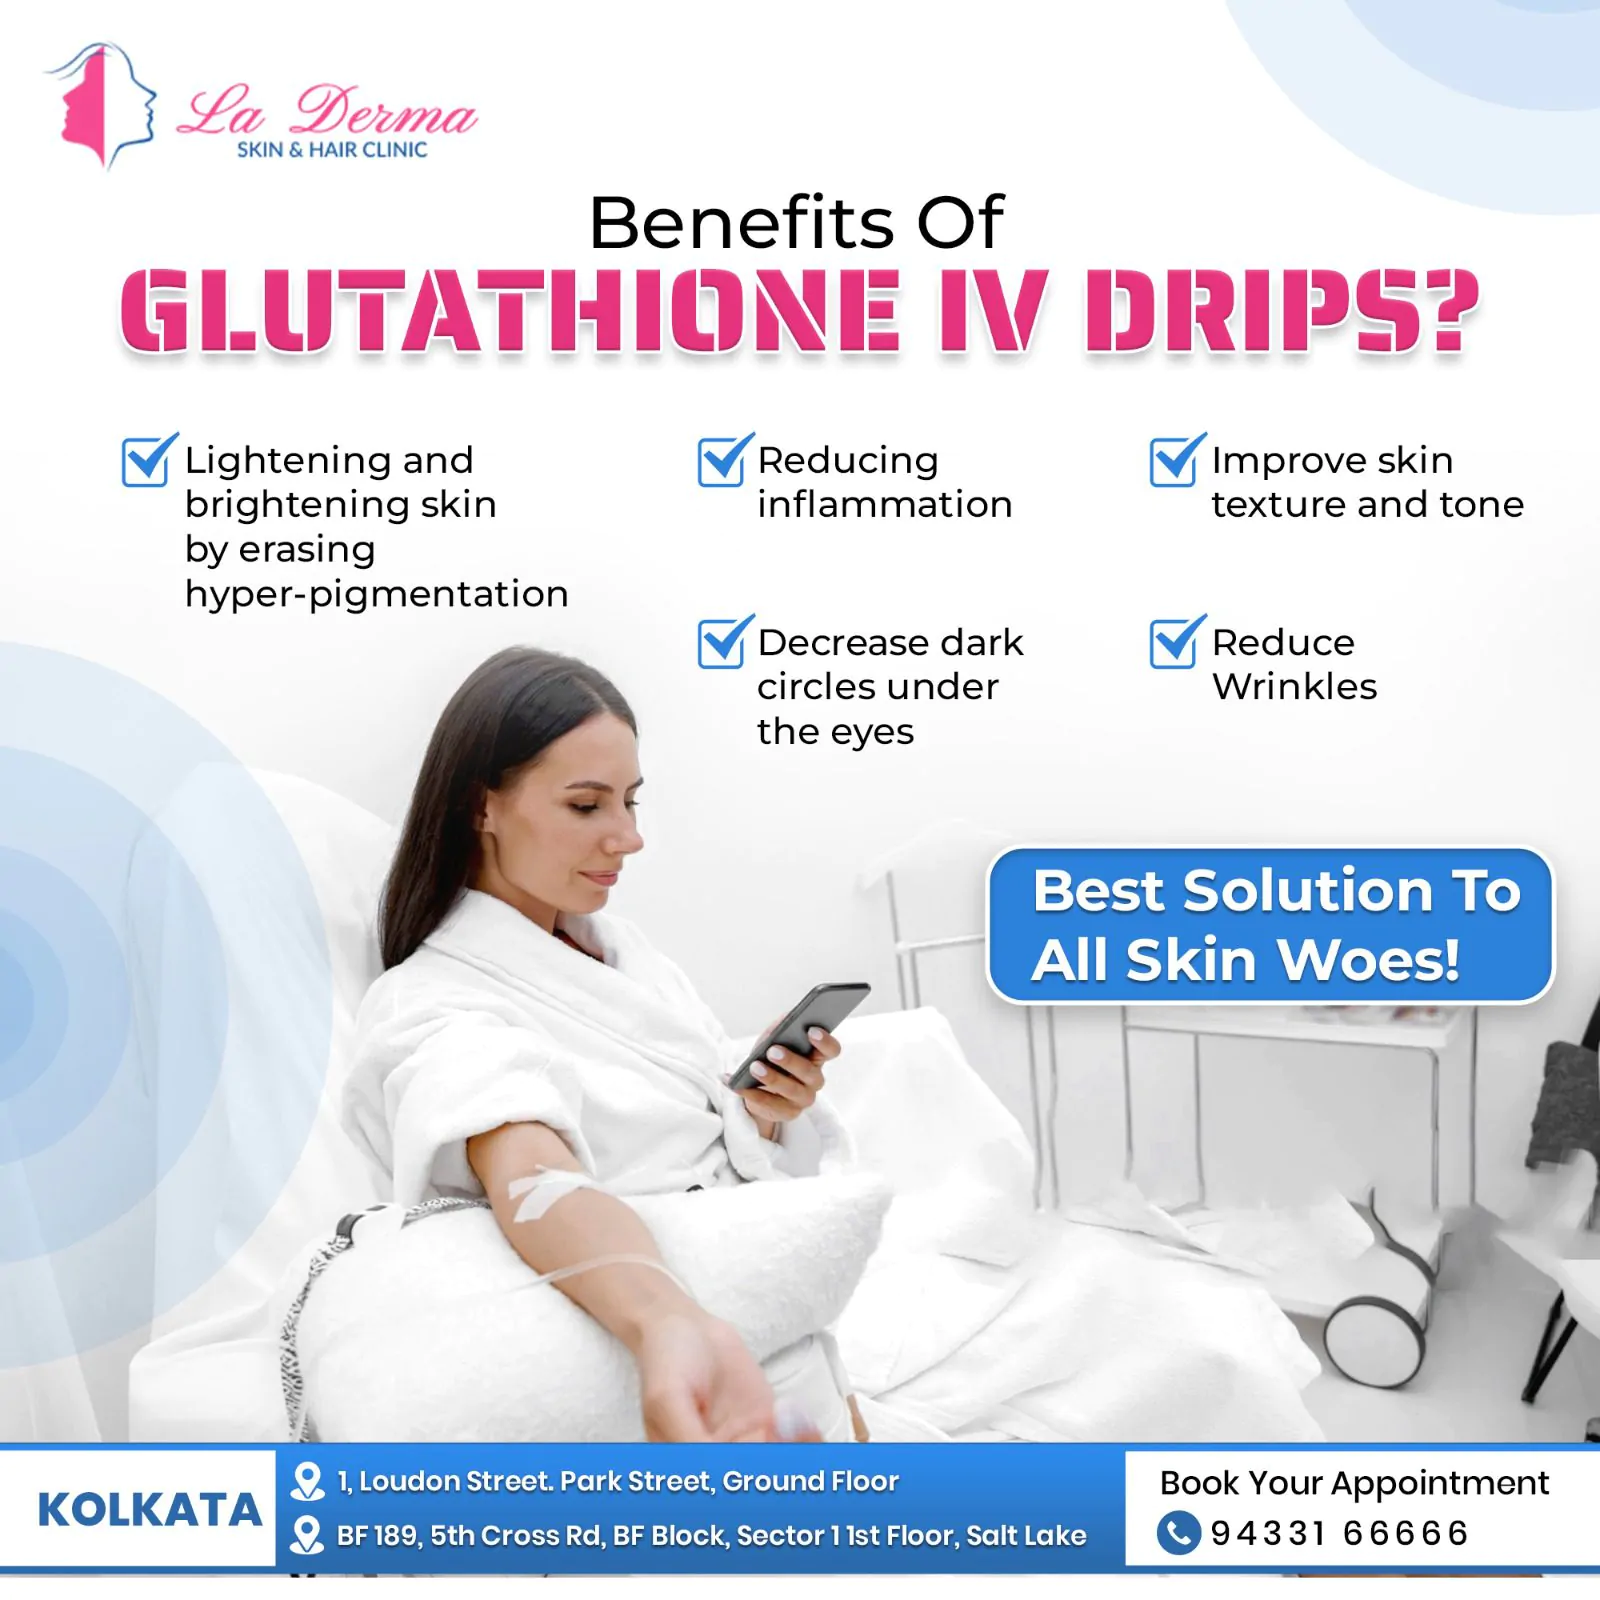 Benefits of Glutathione IV Drips